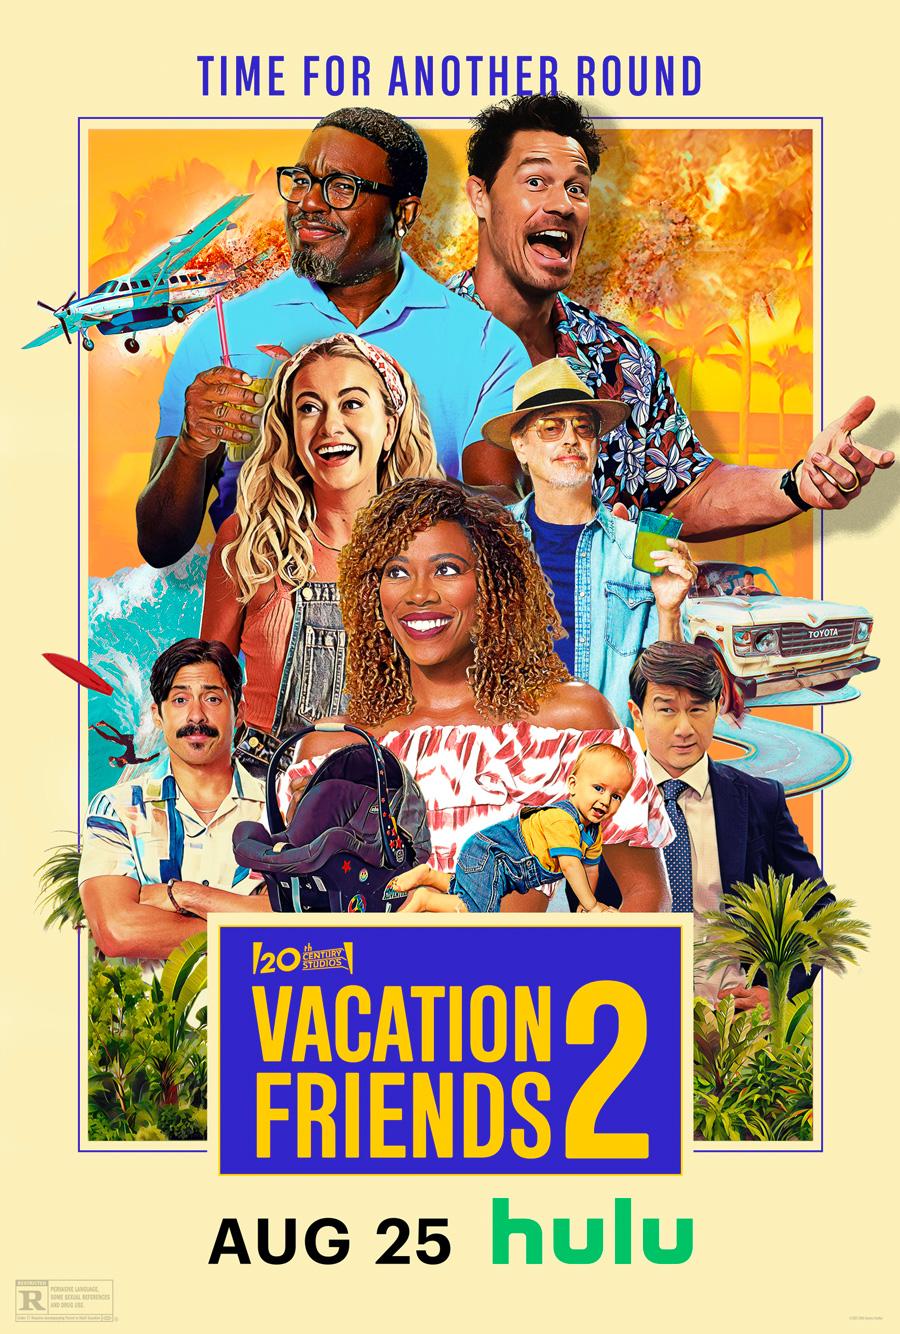 20th Century Studios' Hilarious Comedy Sequel “Vacation Friends 2